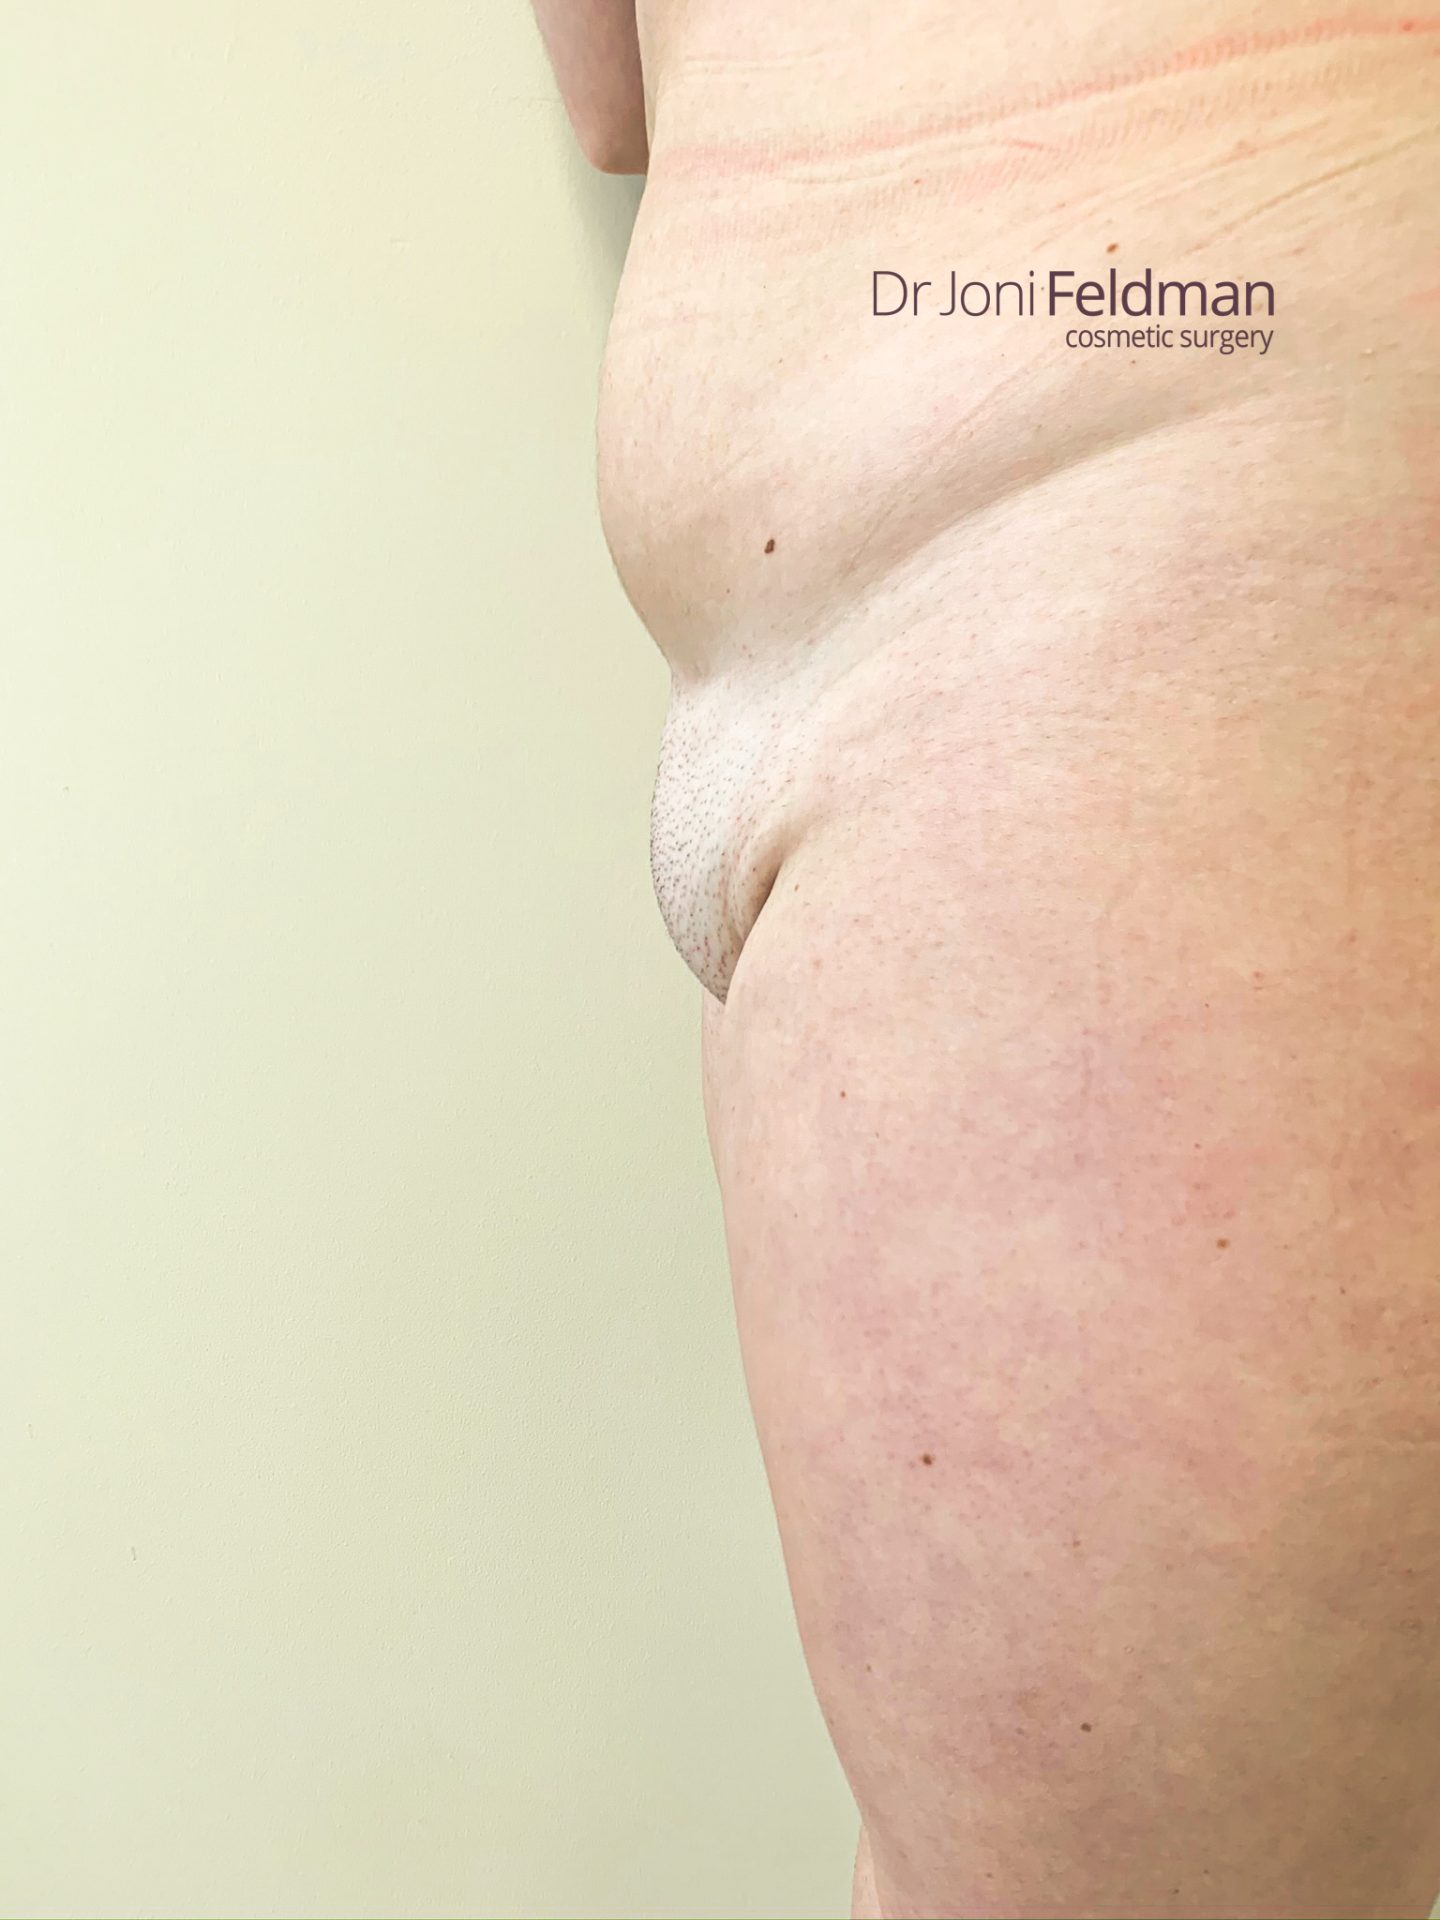 FUPA Mons pubis Liposuction - BEFORE -Dr Joni Feldman in Melbourne